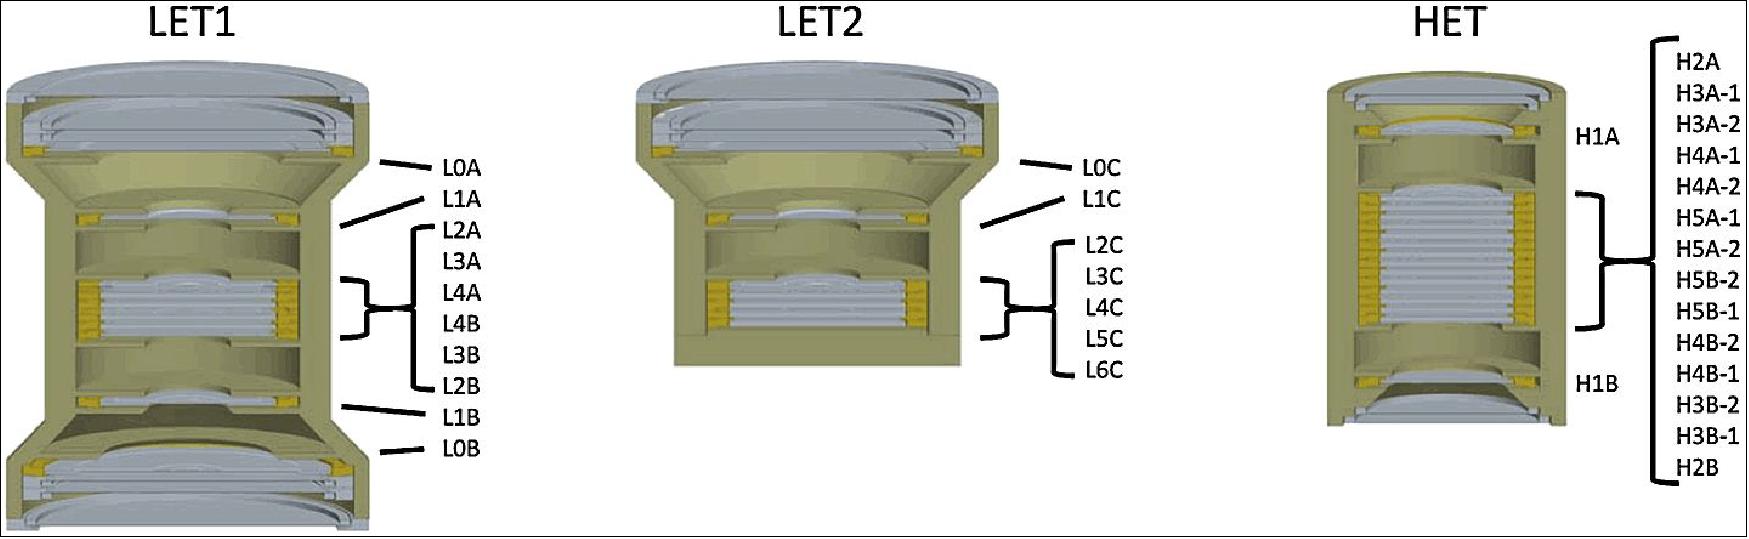 Figure 107: Cut-away illustration of the EPI-Hi telescope designs and detector naming (image credit: ISIS-EPI collaboration)